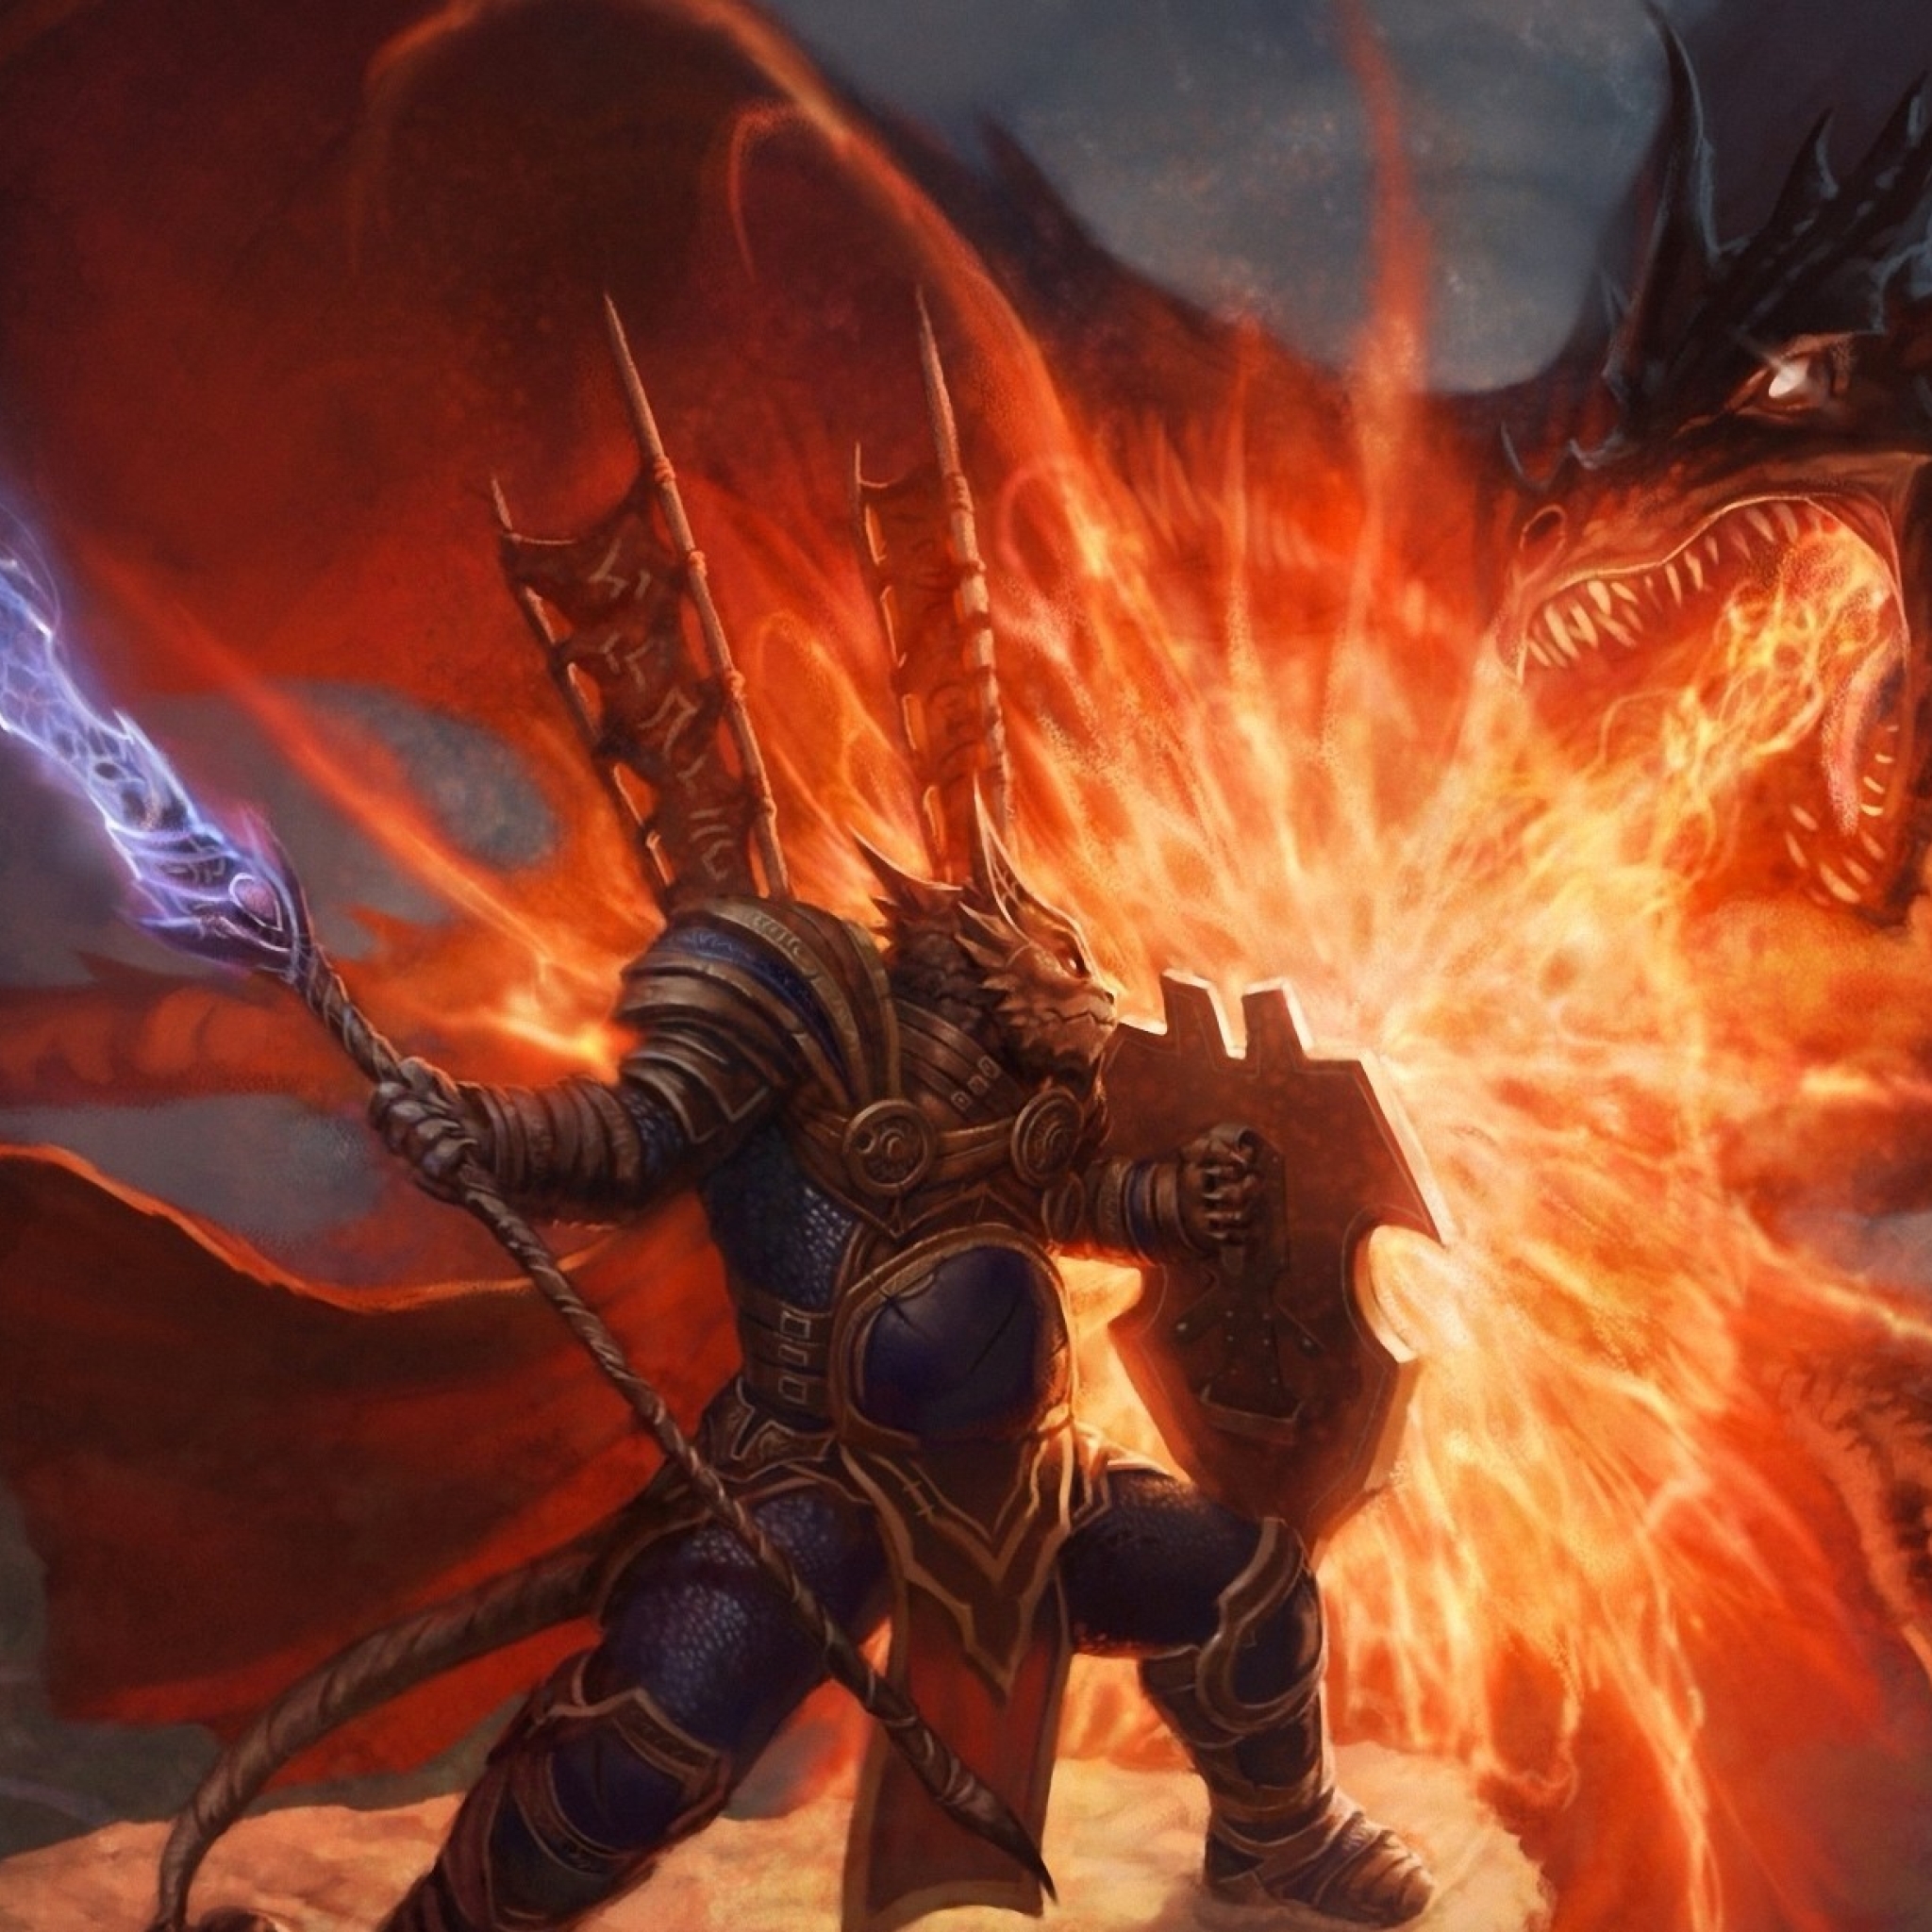 Fiery shield. Огненный рыцарь. Огненный дракон. Огненный воин. Рыцарь огня.